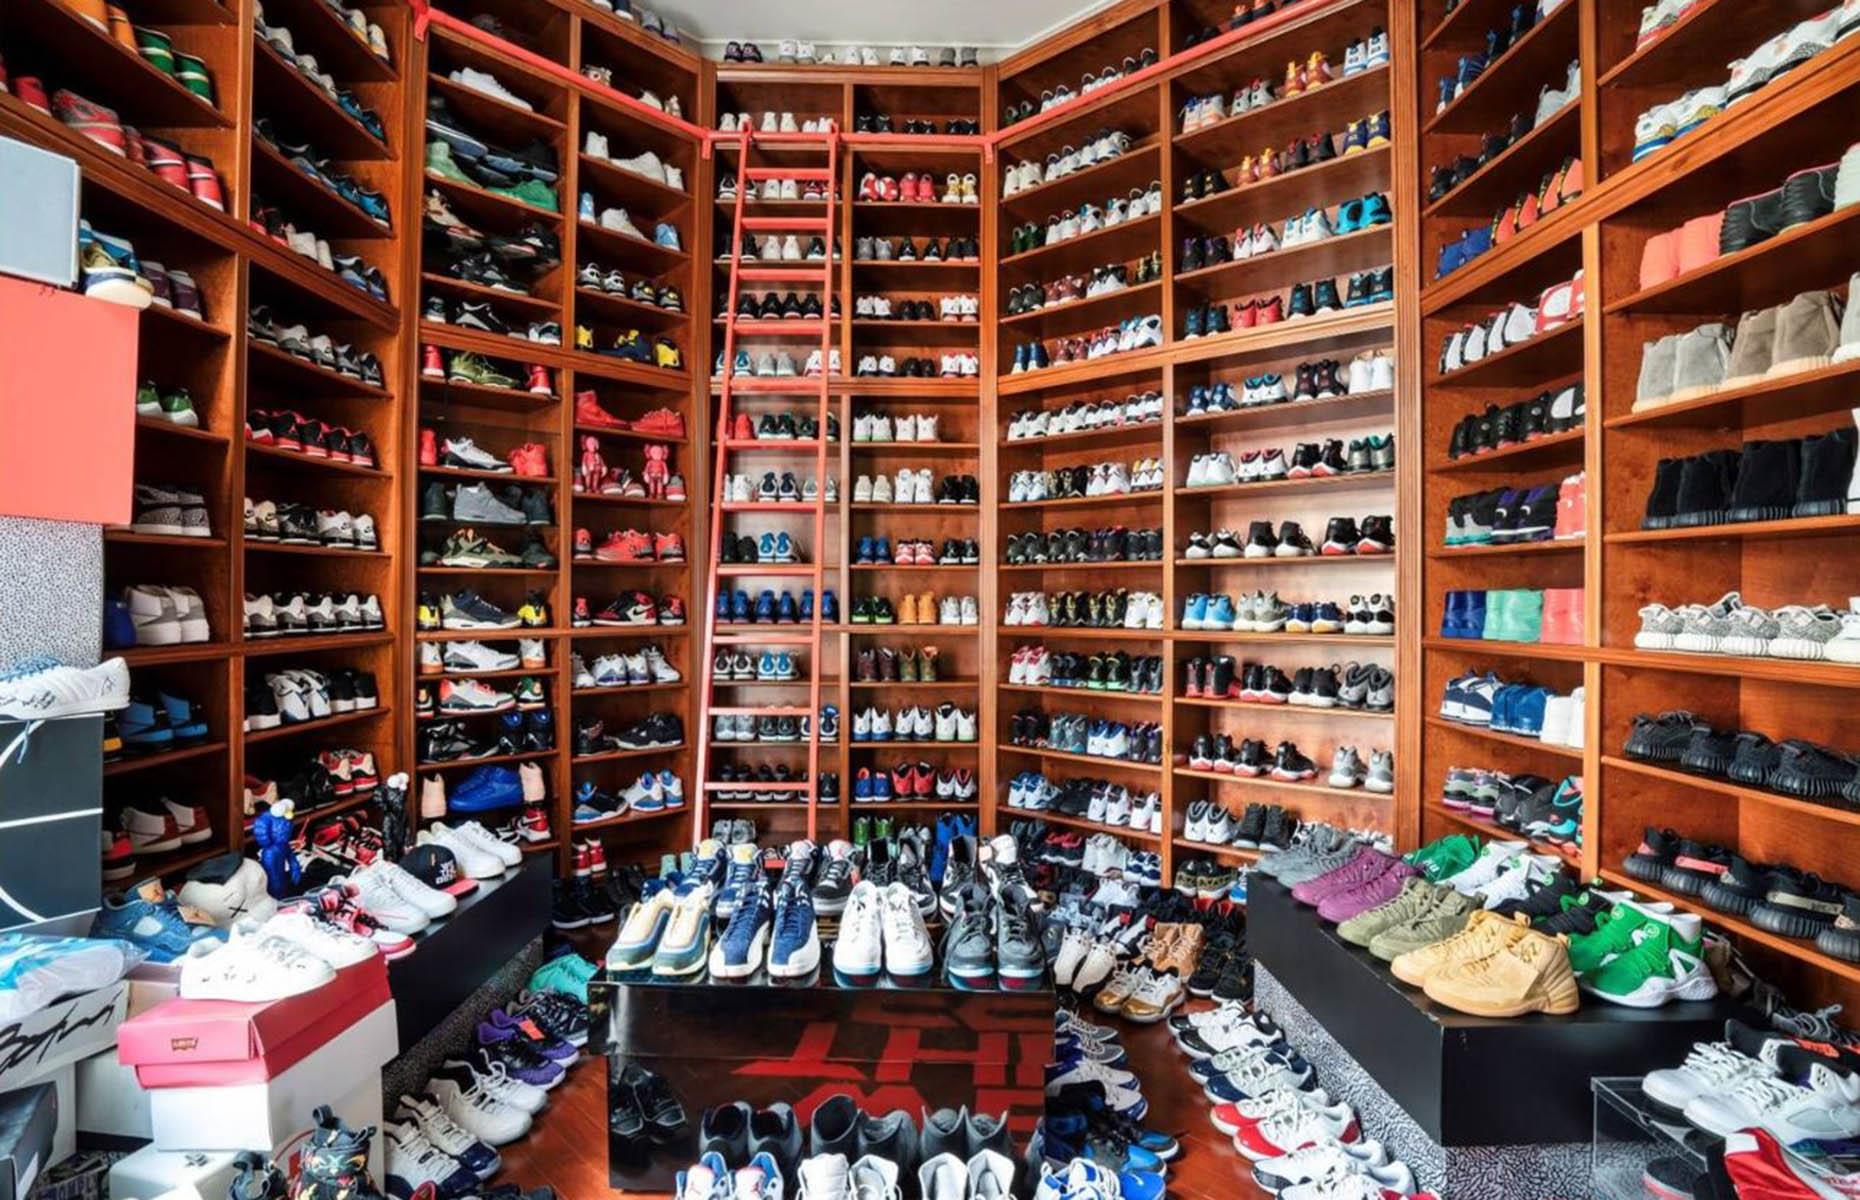 DJ Khaled Sneaker Collection - A Sneak Peek into DJ Khaled's